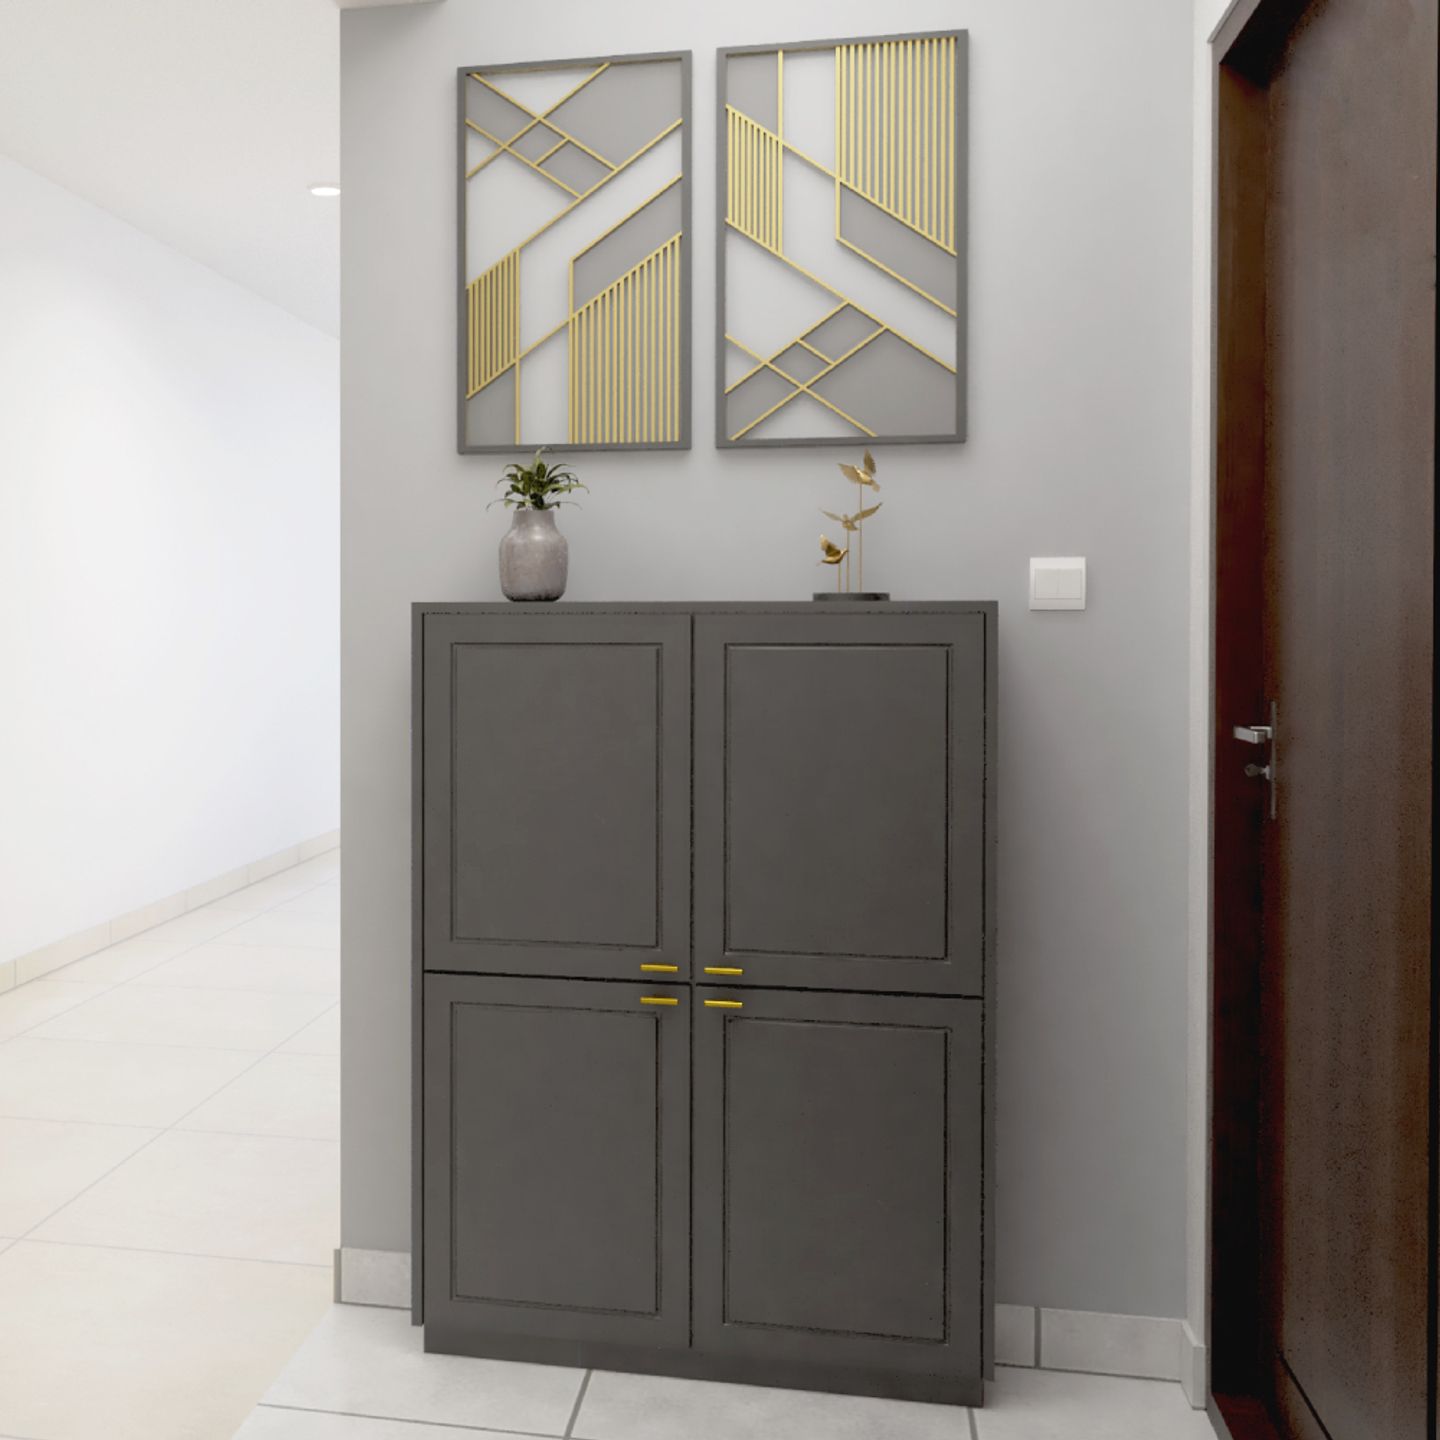 Contemporary Foyer Design With Grey Storage Unit - Livspace